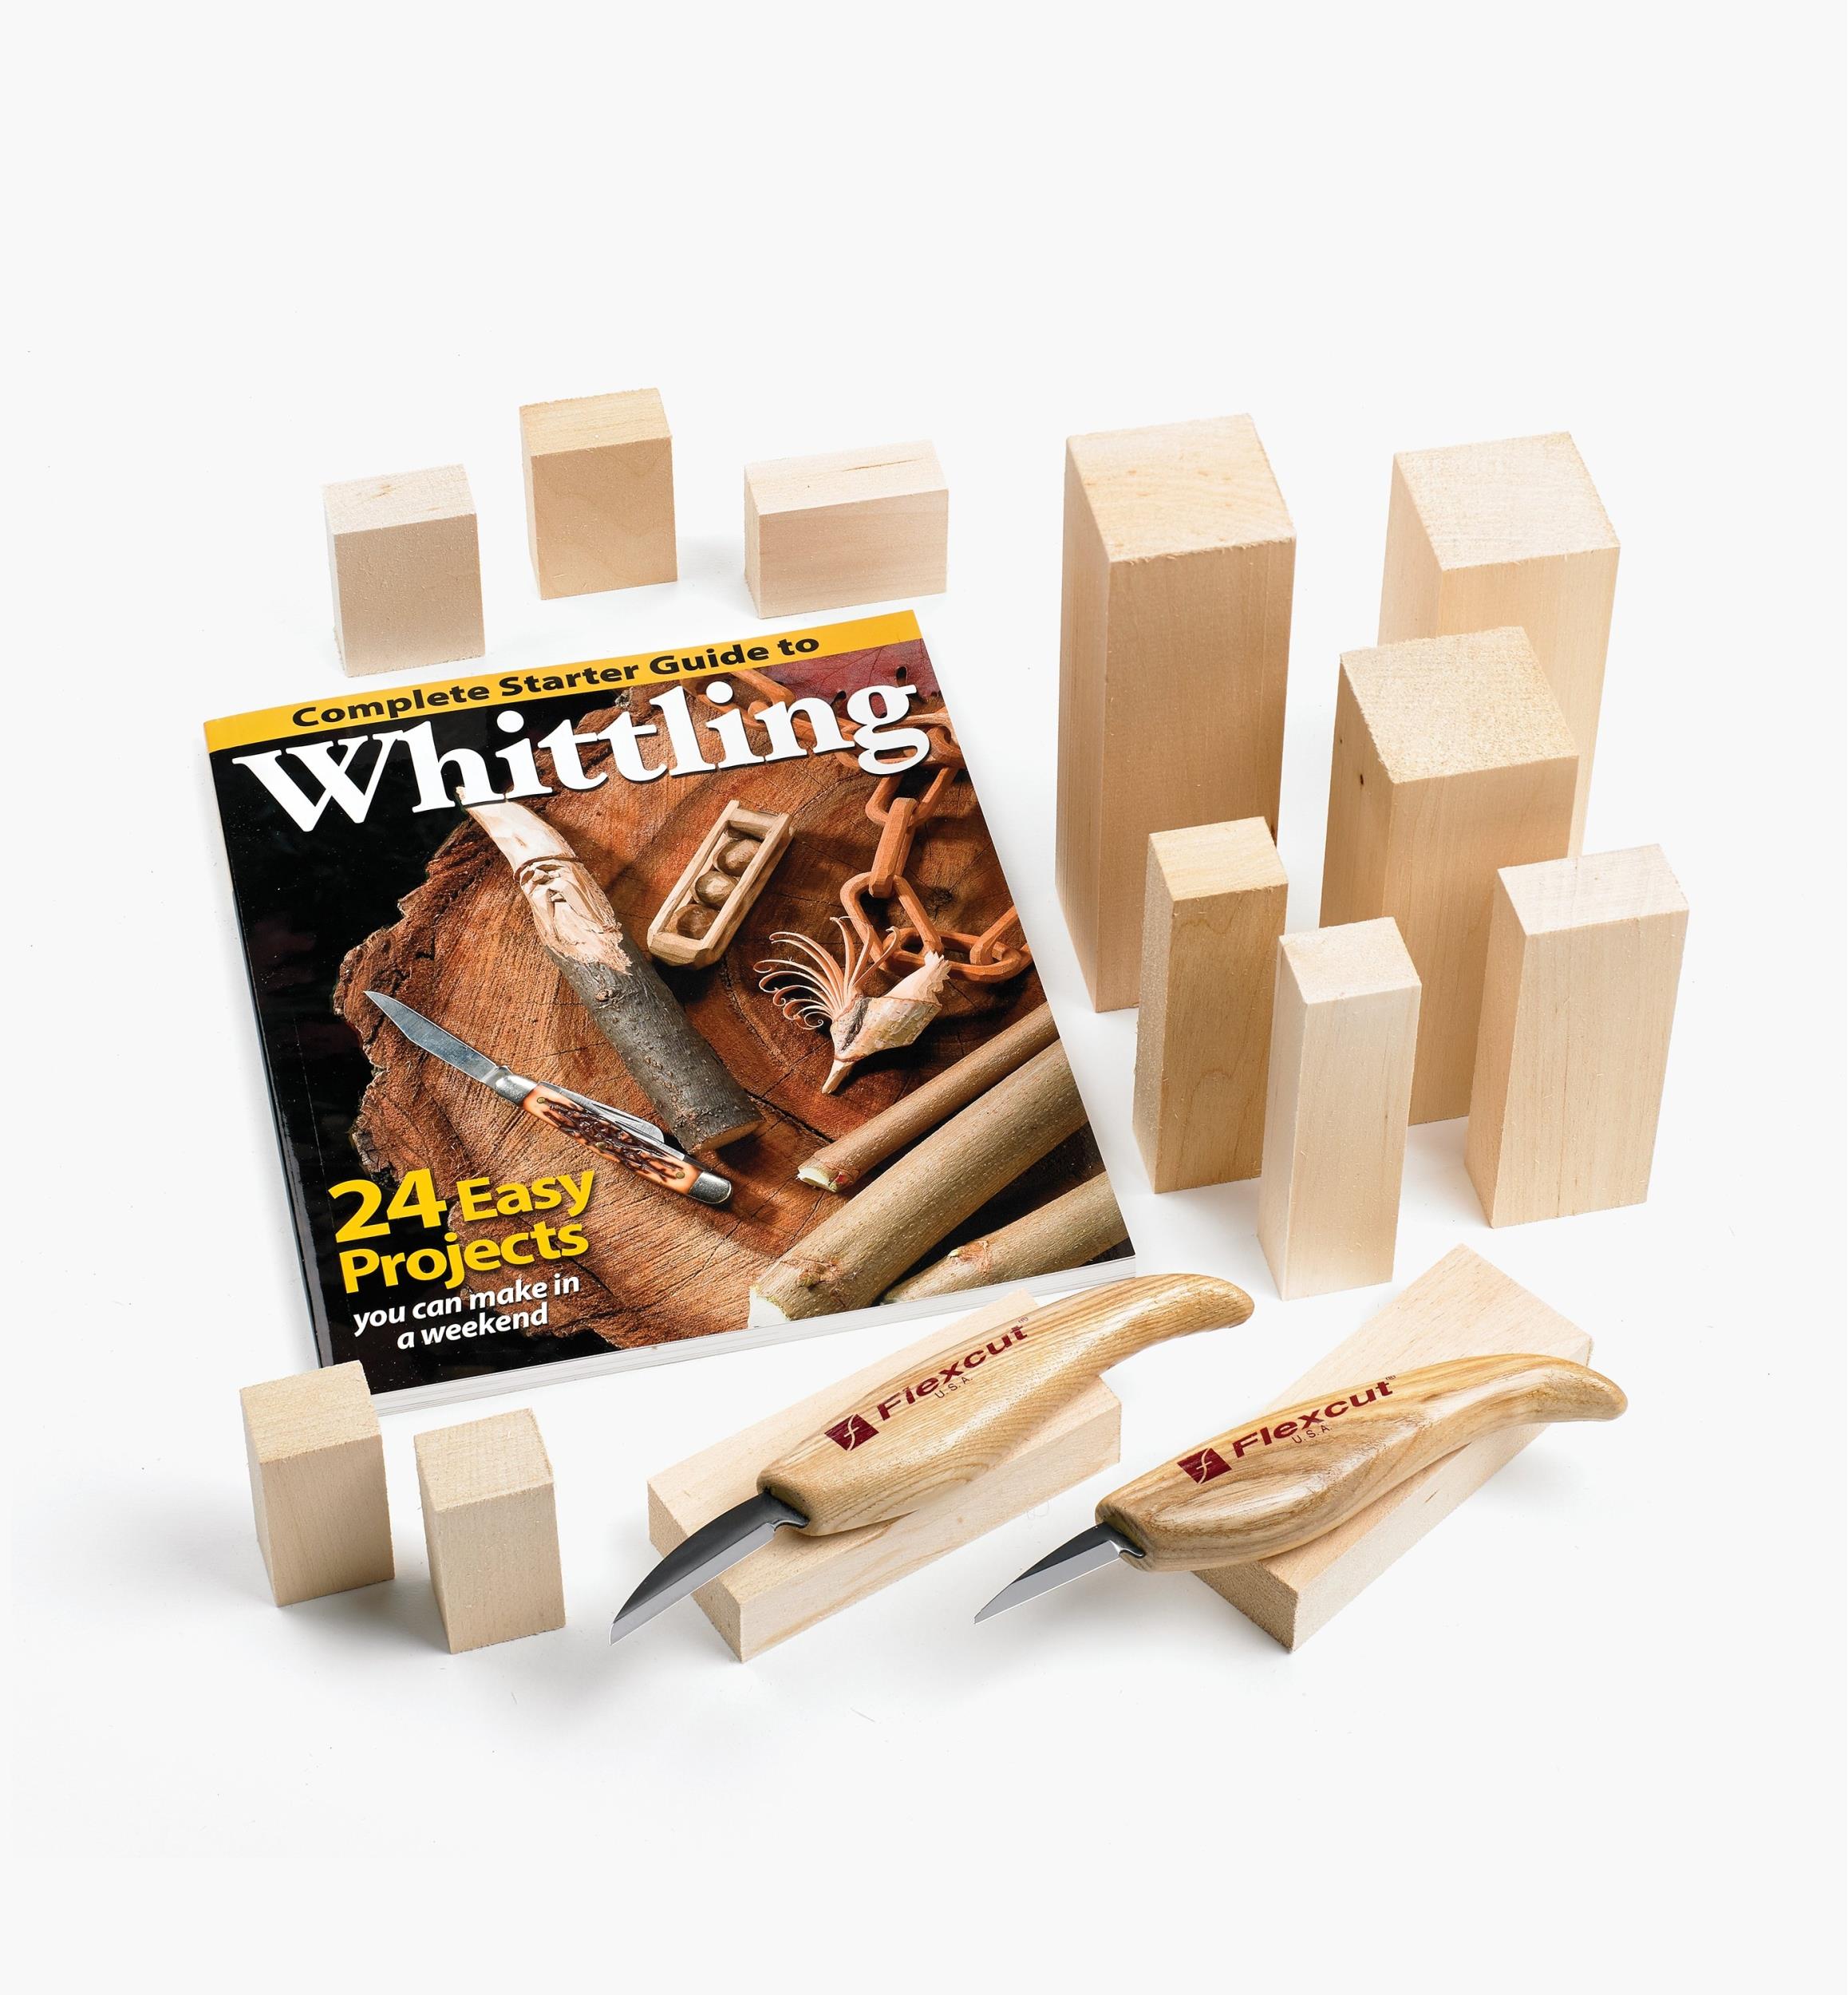 IMYMEE Wood Whittling Kit for Beginners-Complete Whittling Set